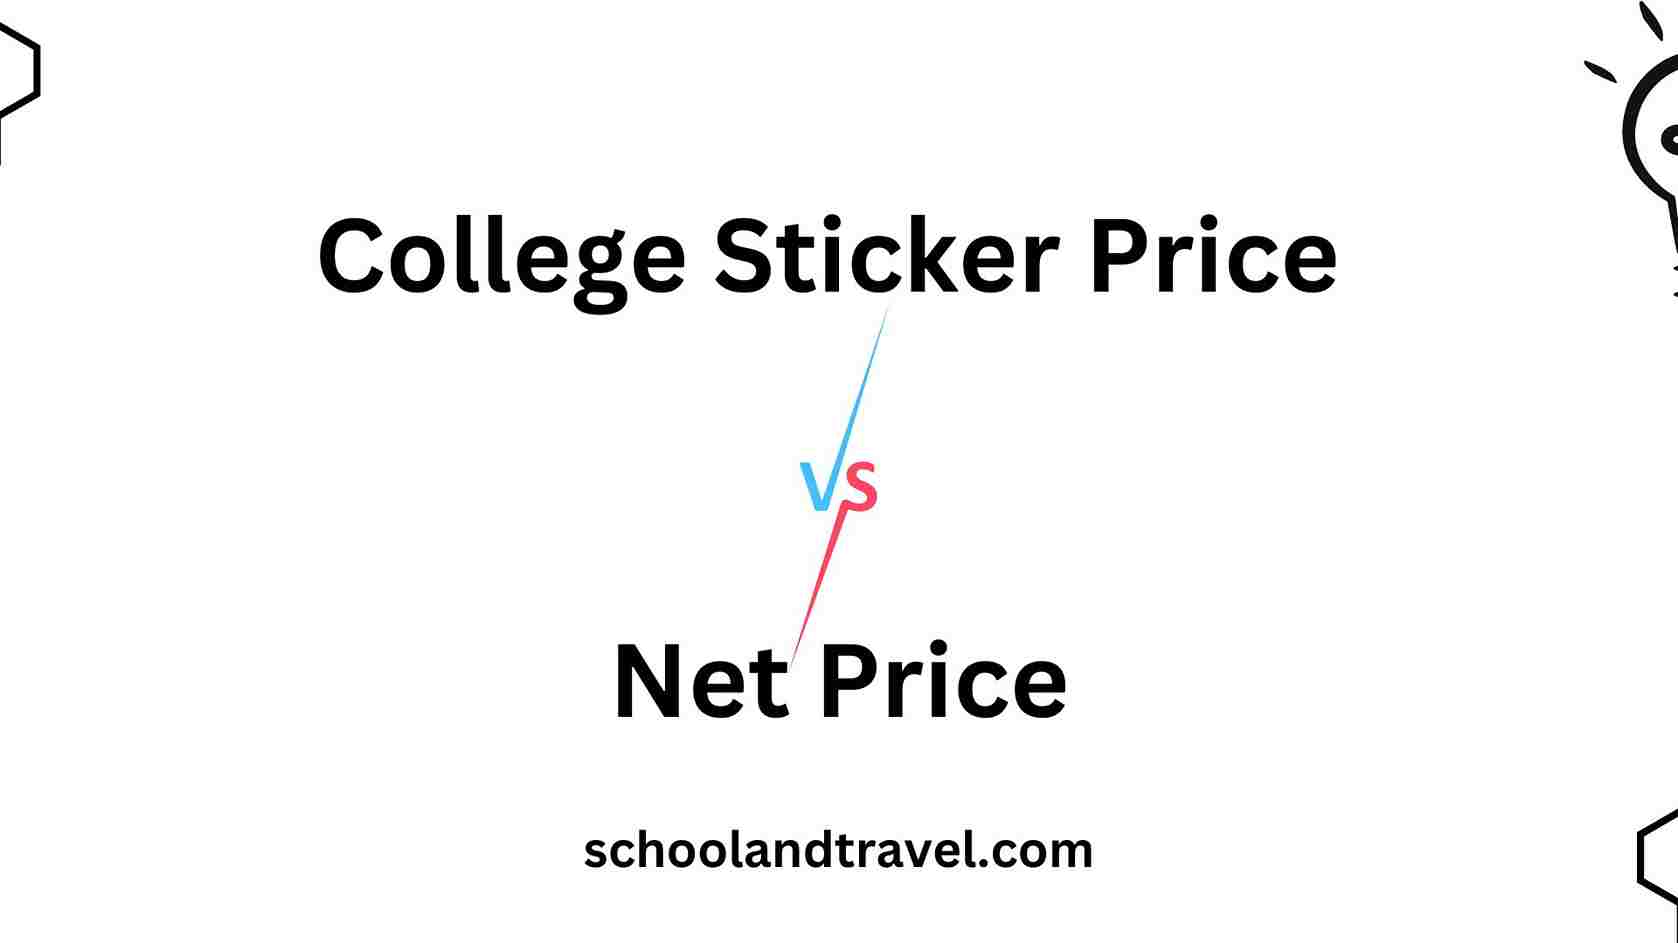 College Sticker Price vs. Net Price